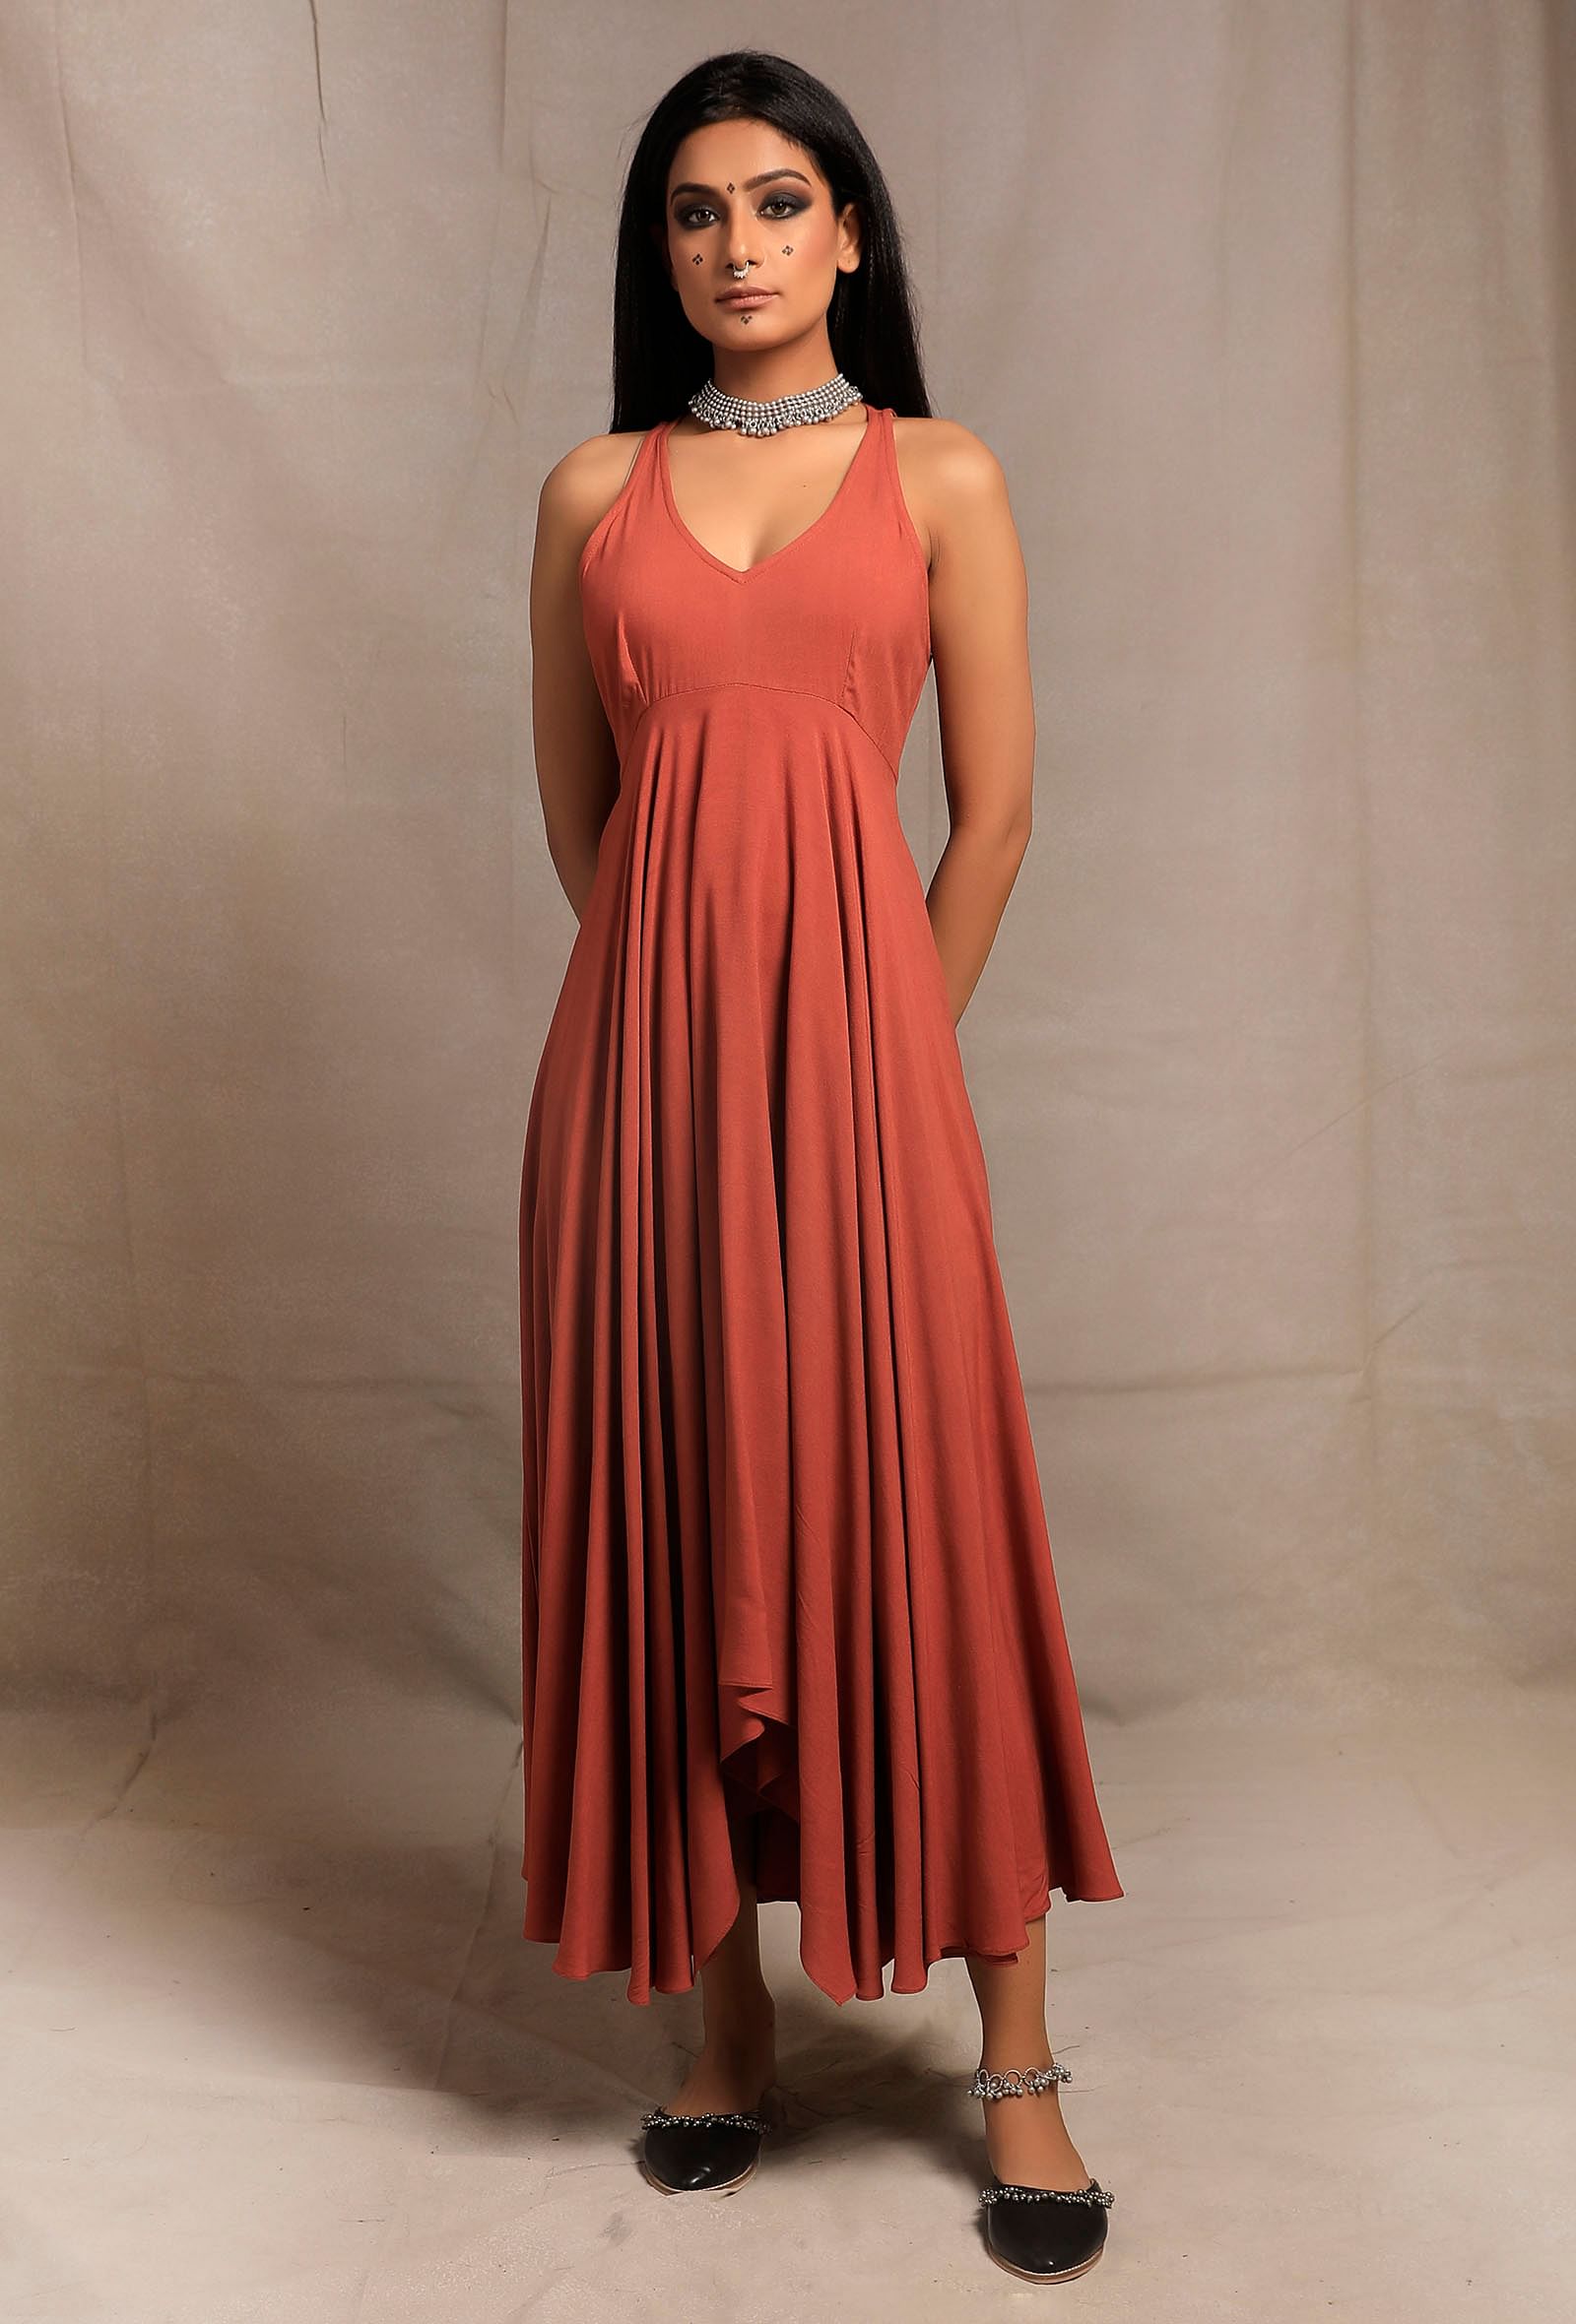 Set of 2: Black Front Open Asymmetrical Printed Shrug with Burnt Brick Sleeveless Asymmetrical Dress